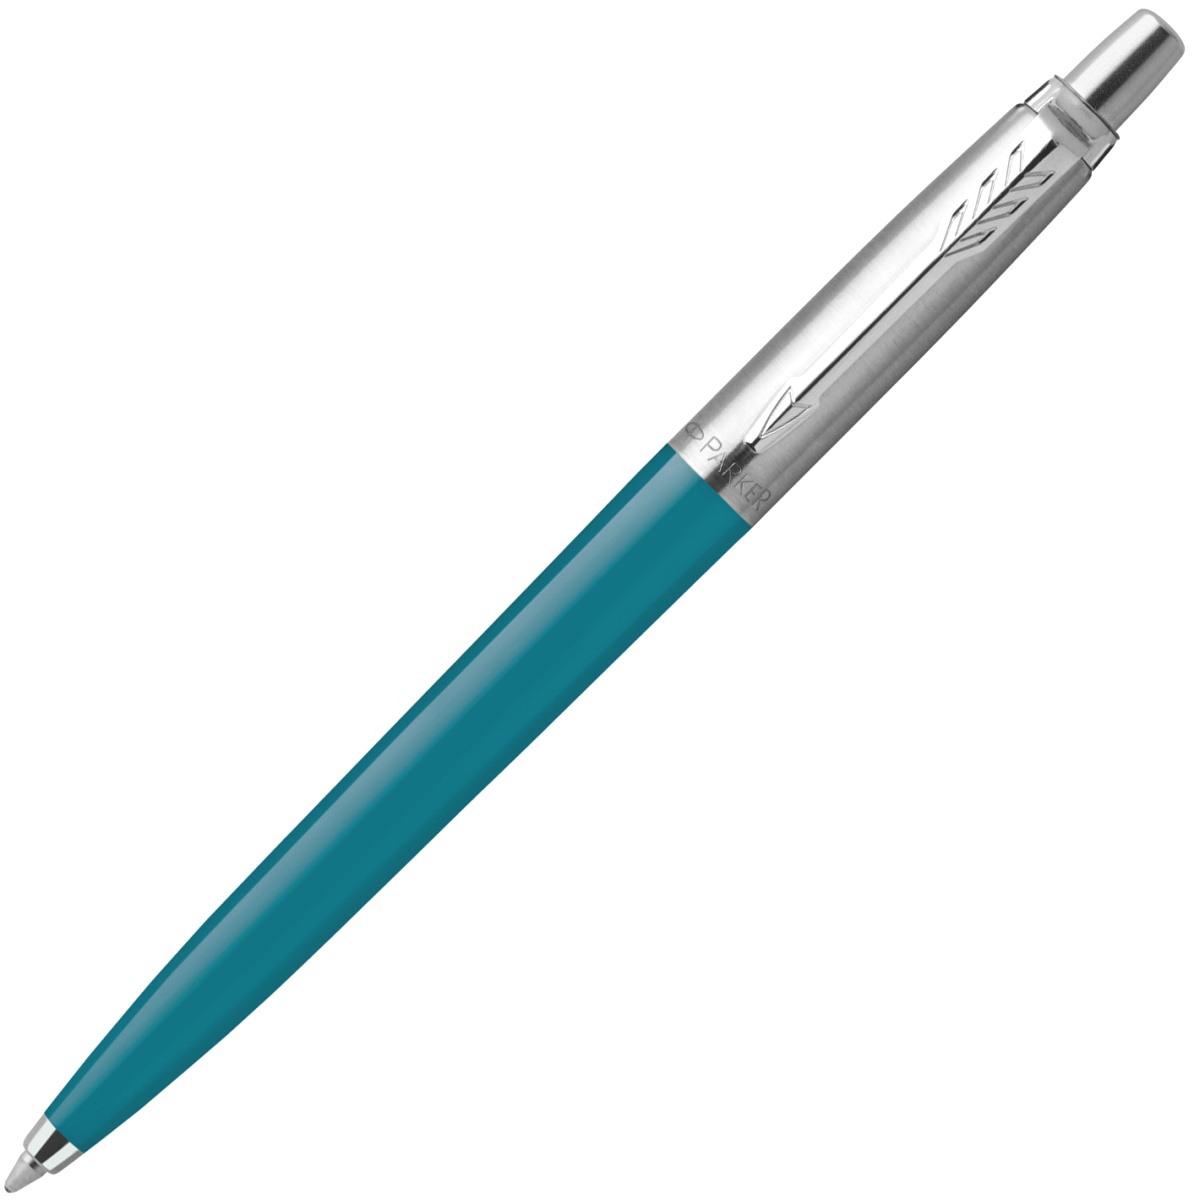  Ручка шариковая Parker Jotter Original K60, Peacock Blue 3155C